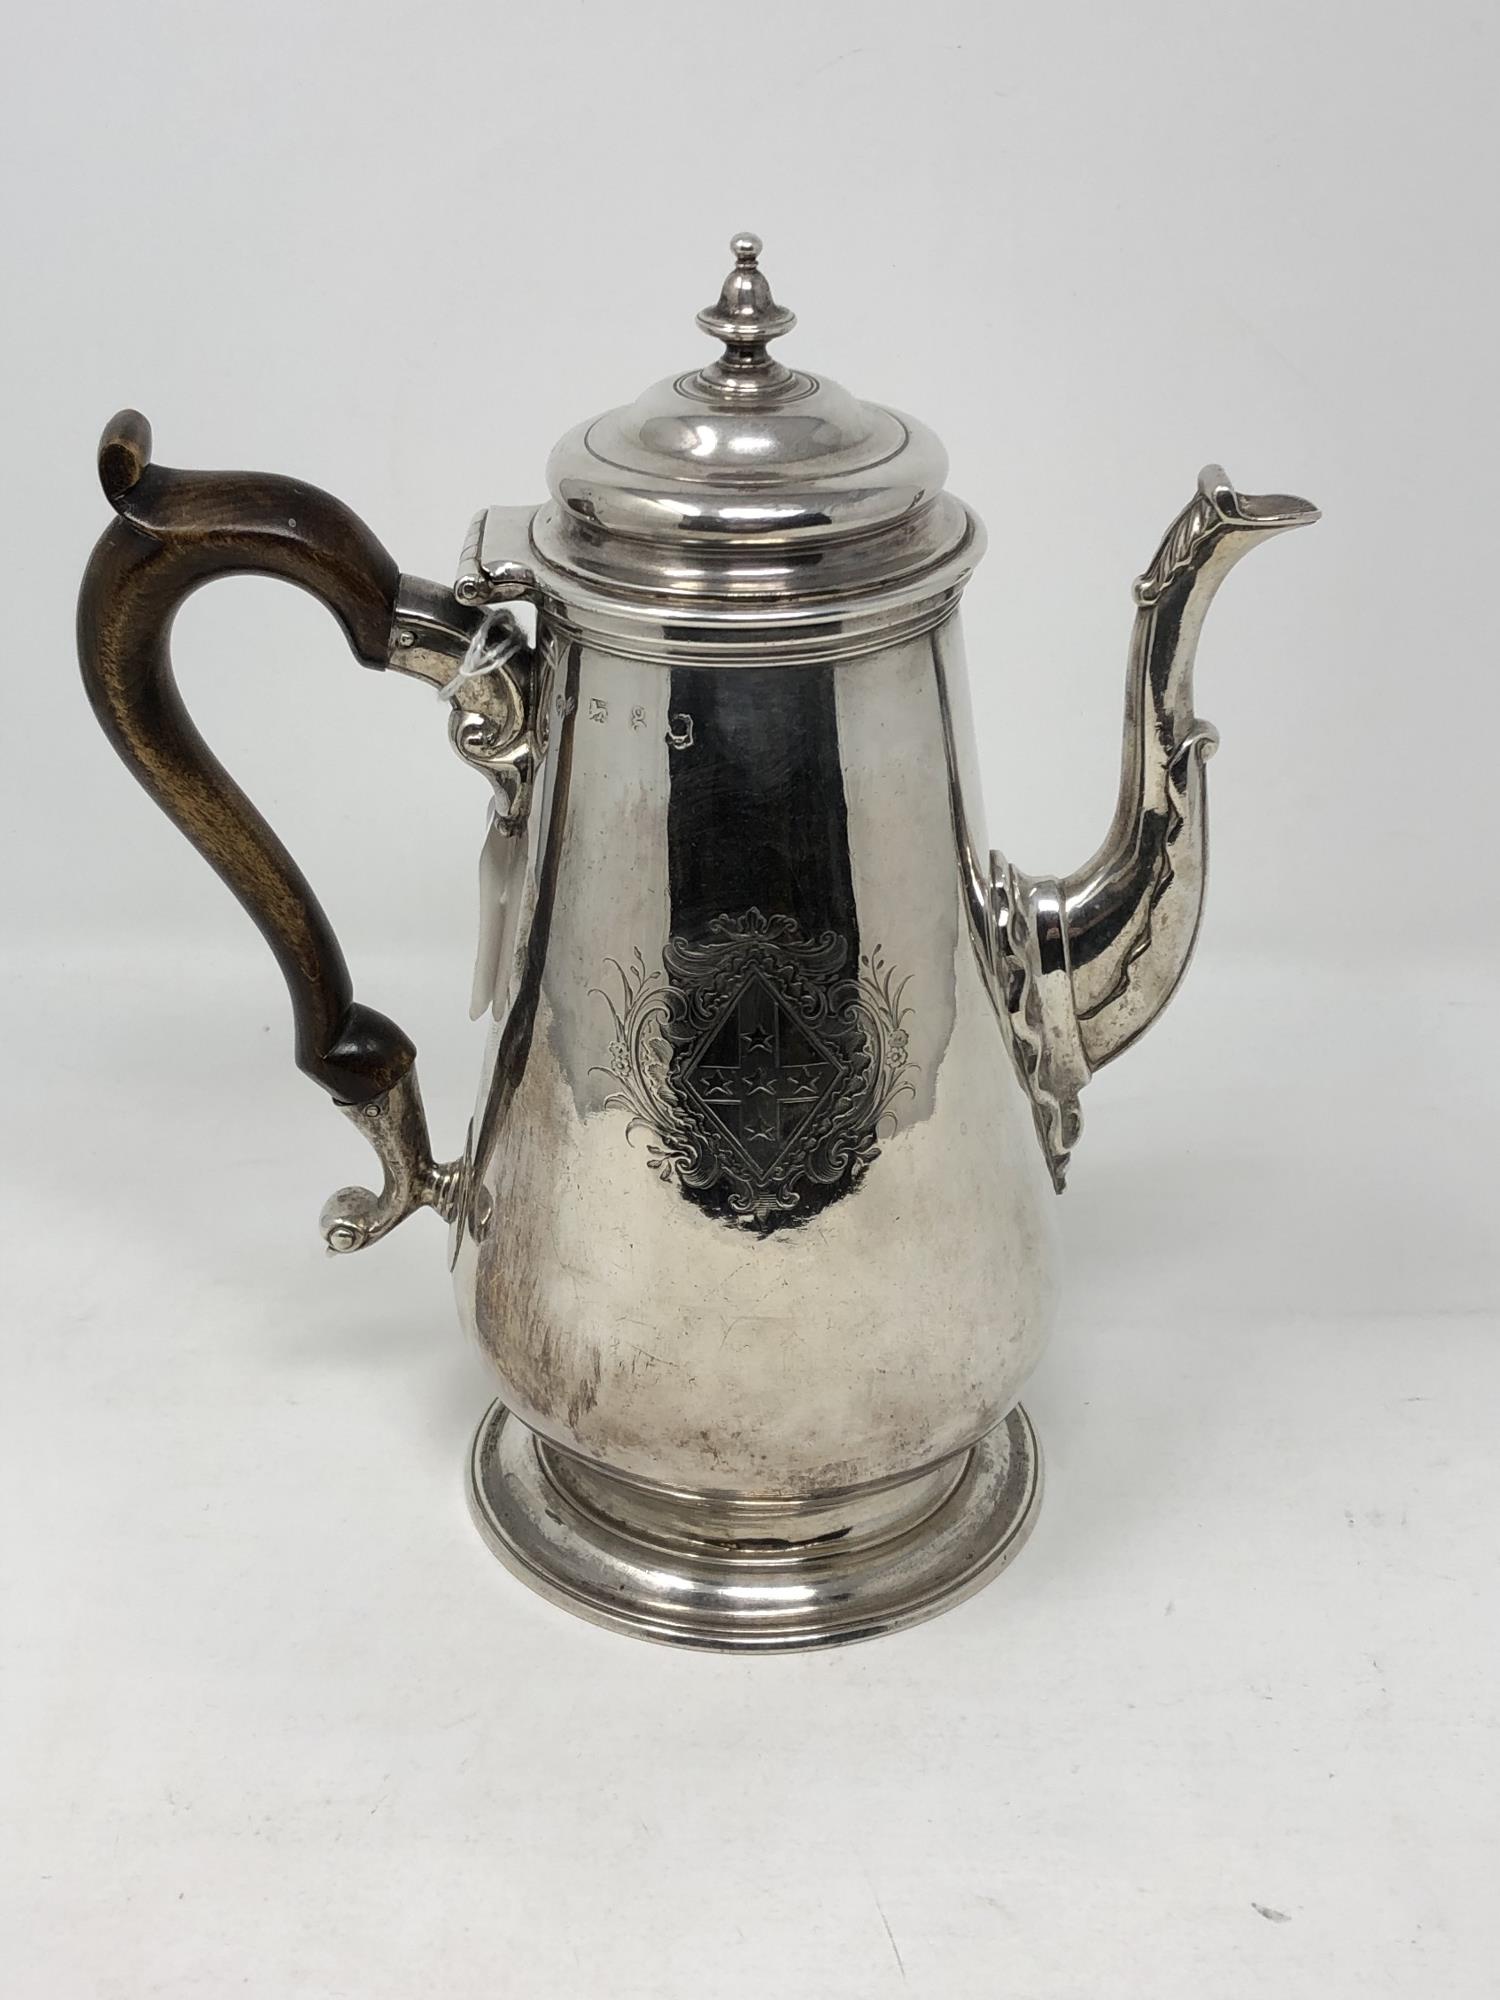 A fine George II silver coffee pot, London 1742, Richard Bayley or Richard Beale,